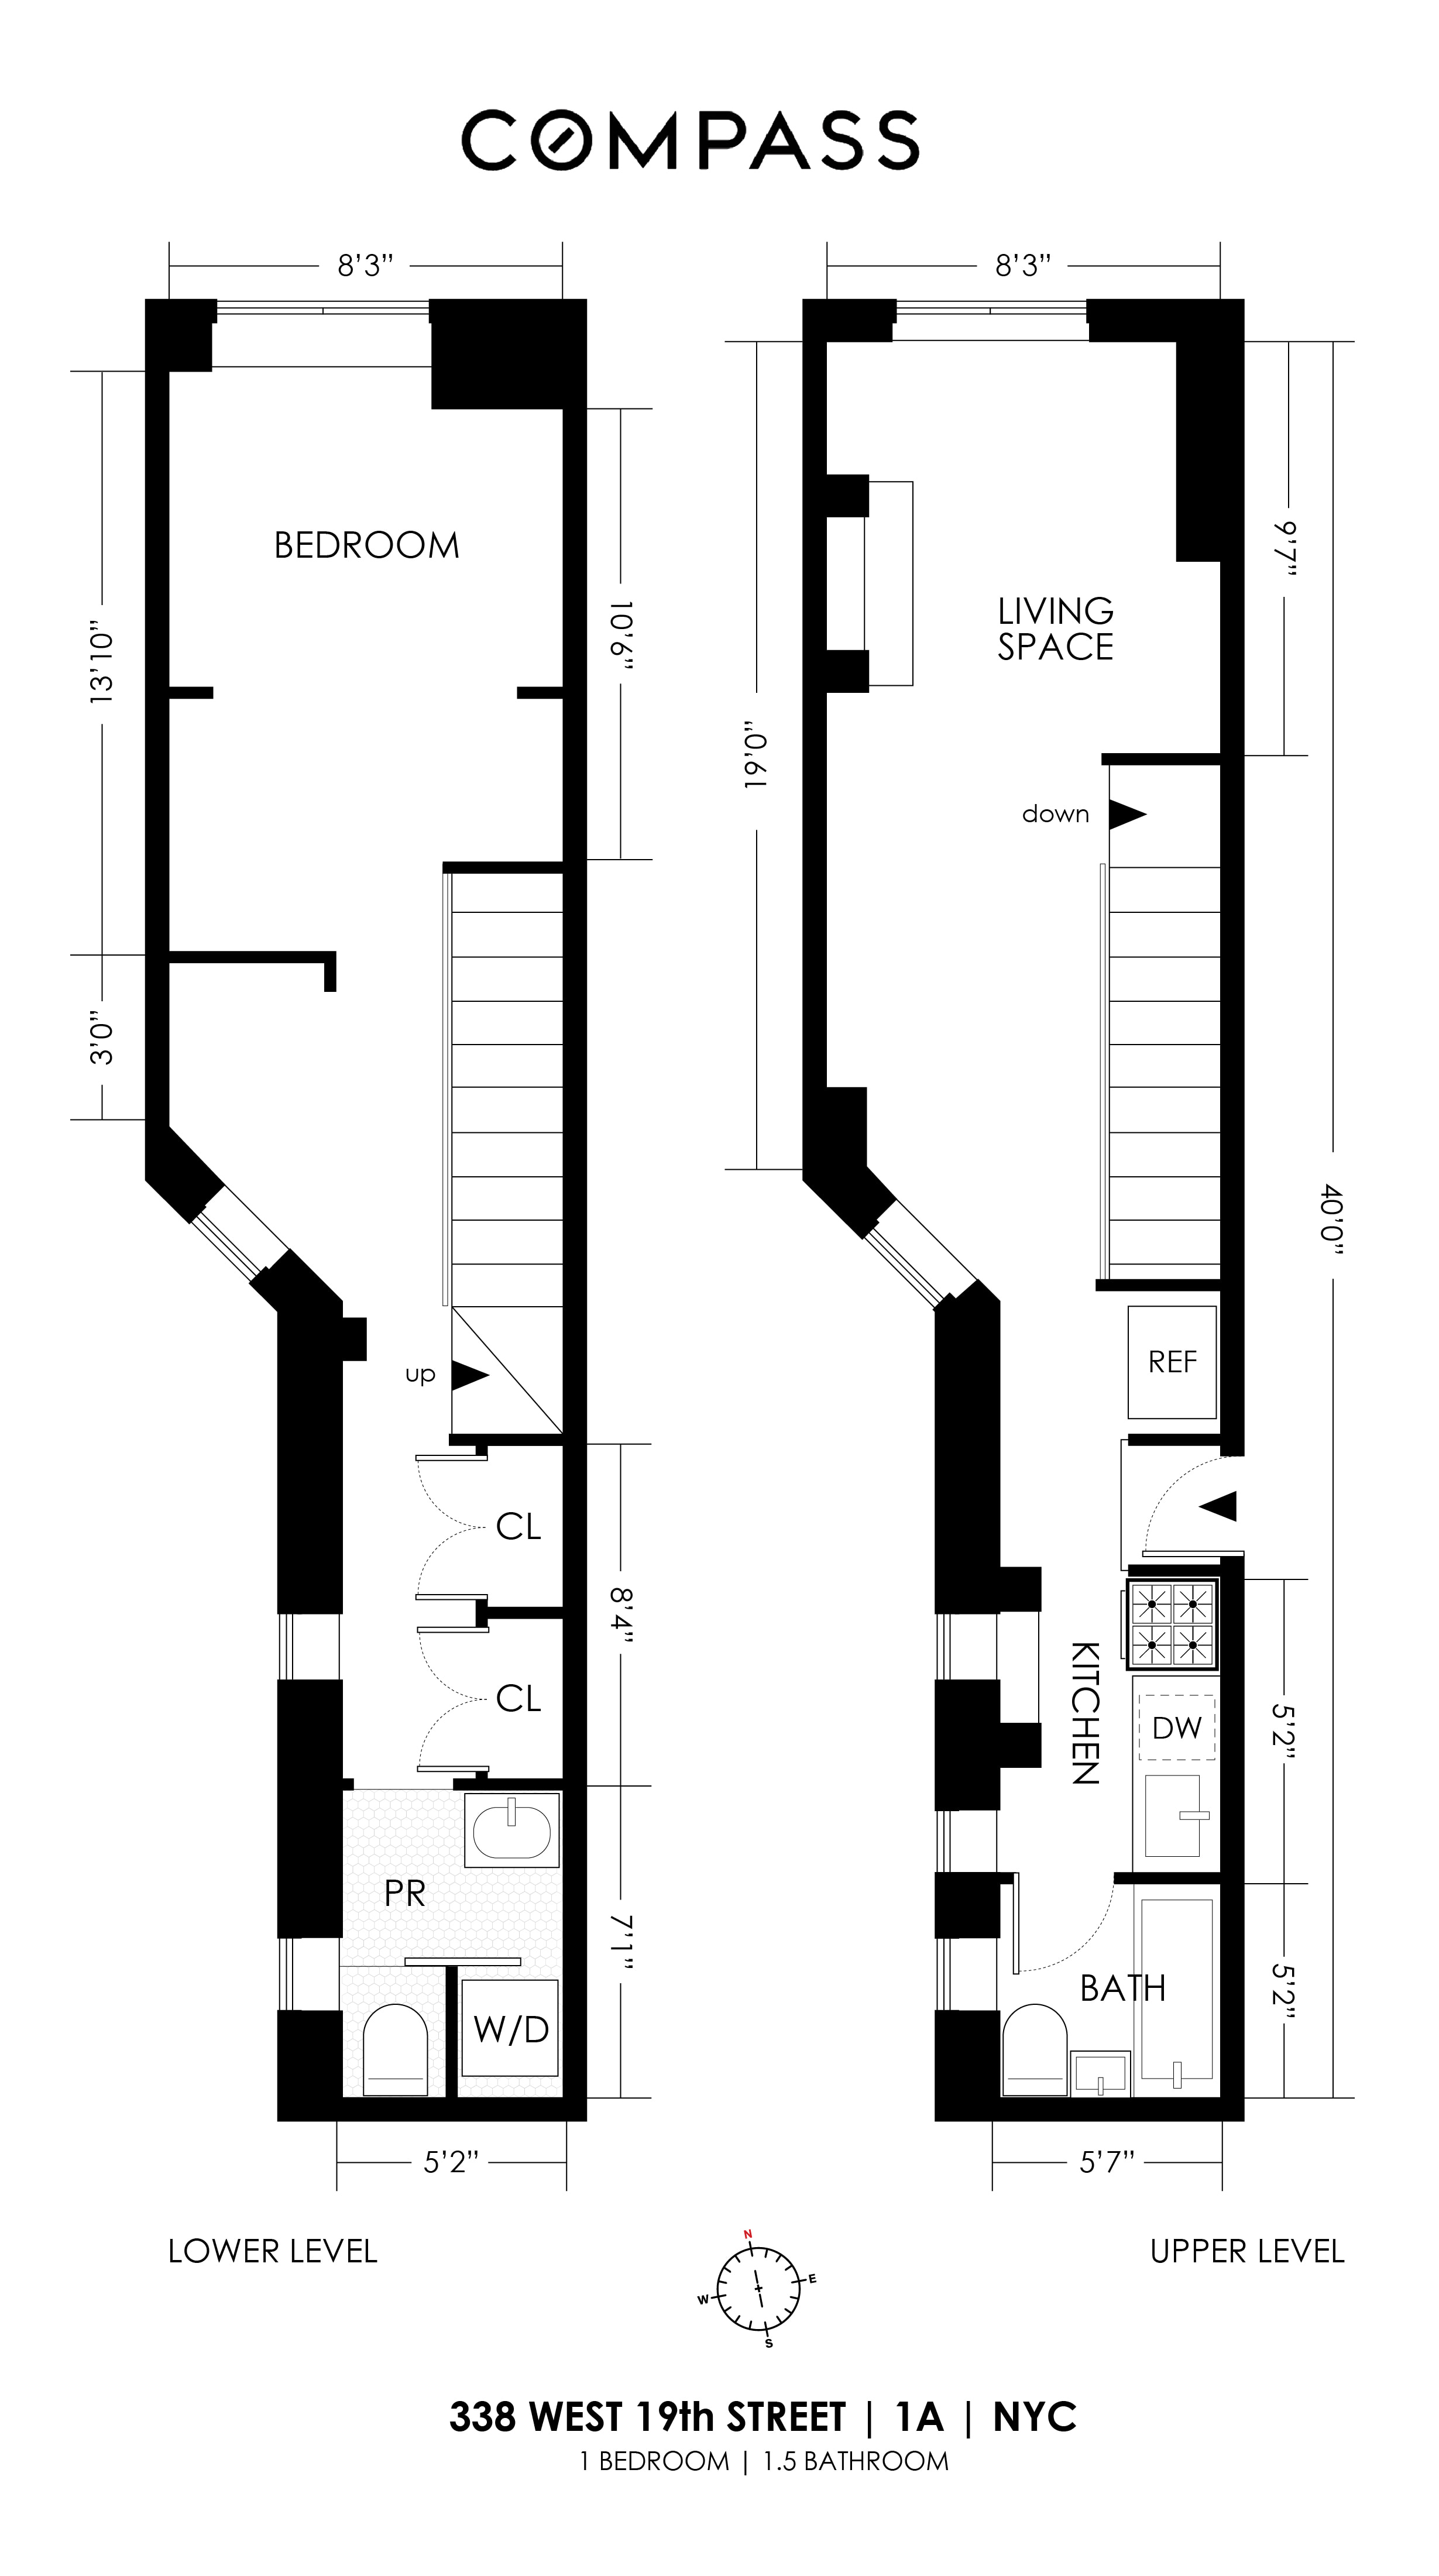 Floorplan for 338 West 19th Street, 1A